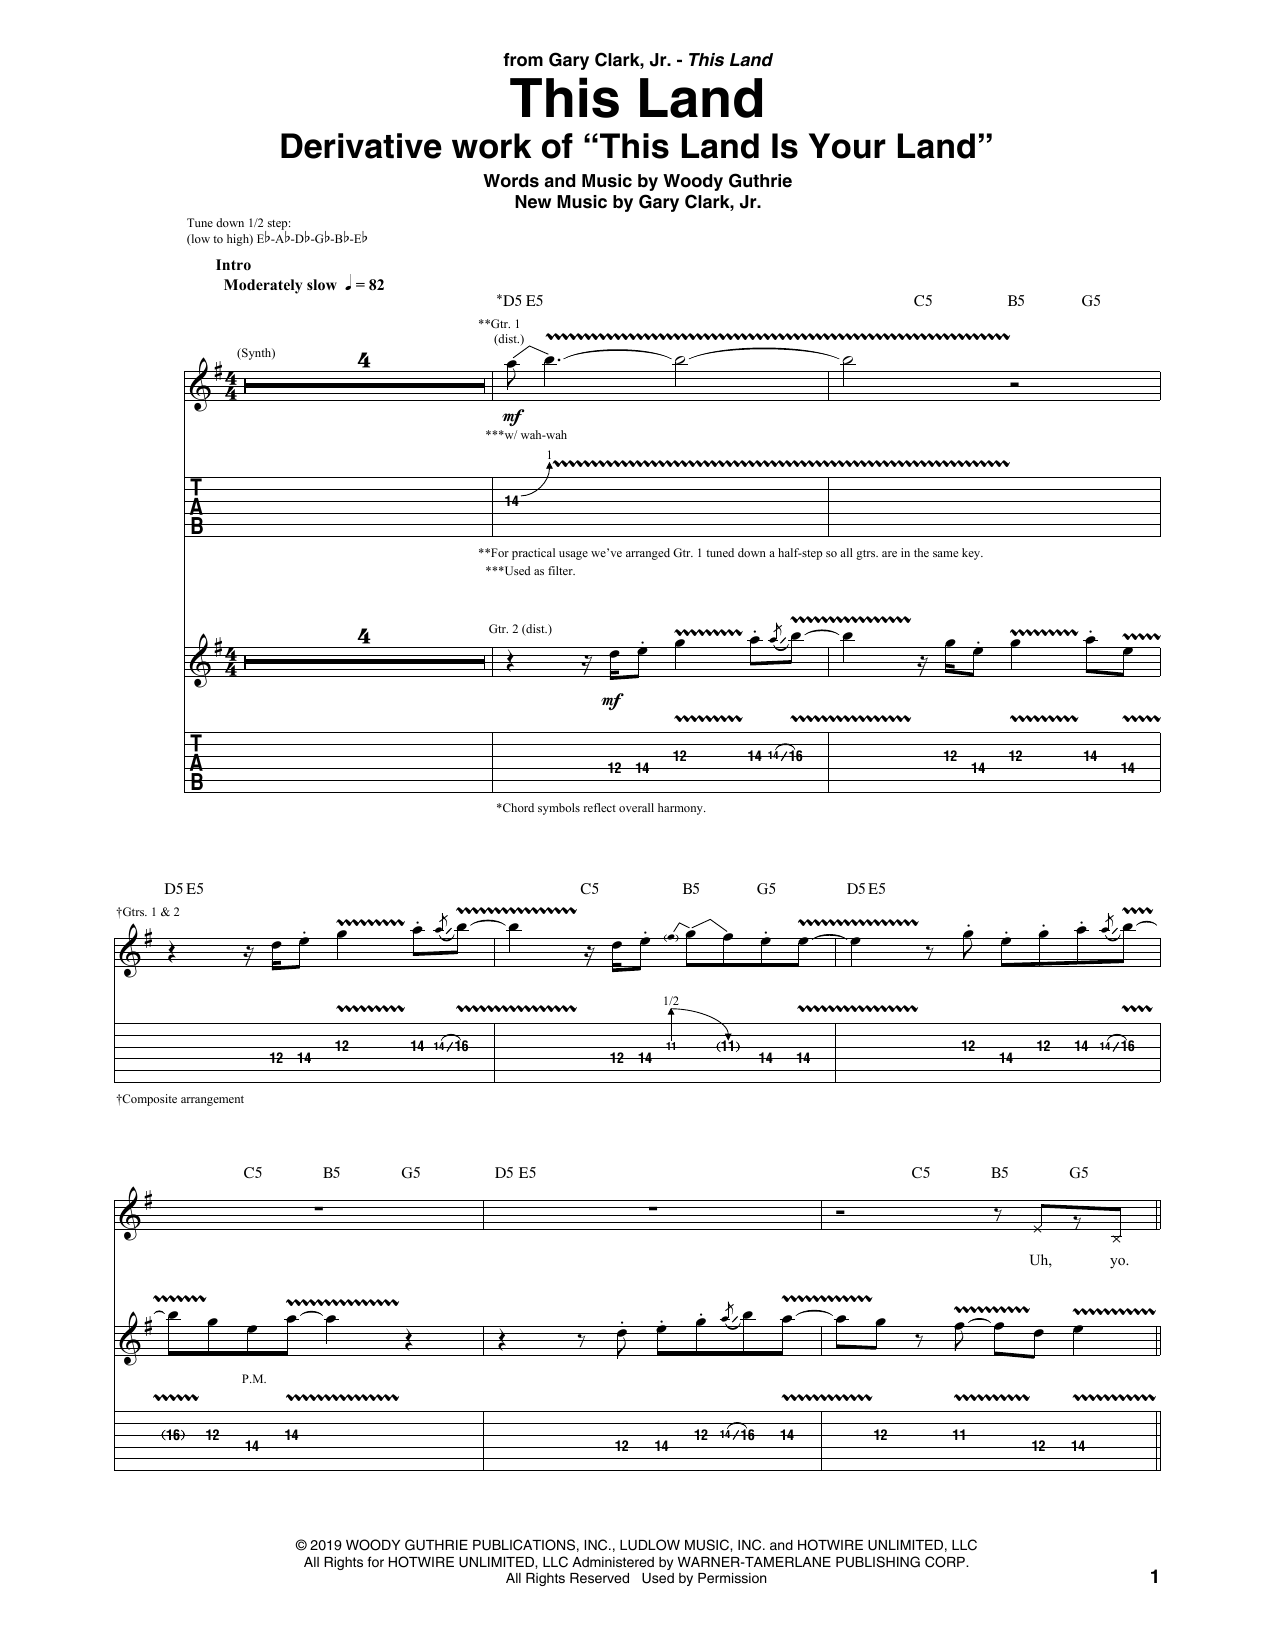 Gary Clark, Jr. This Land Sheet Music Notes & Chords for Guitar Tab - Download or Print PDF